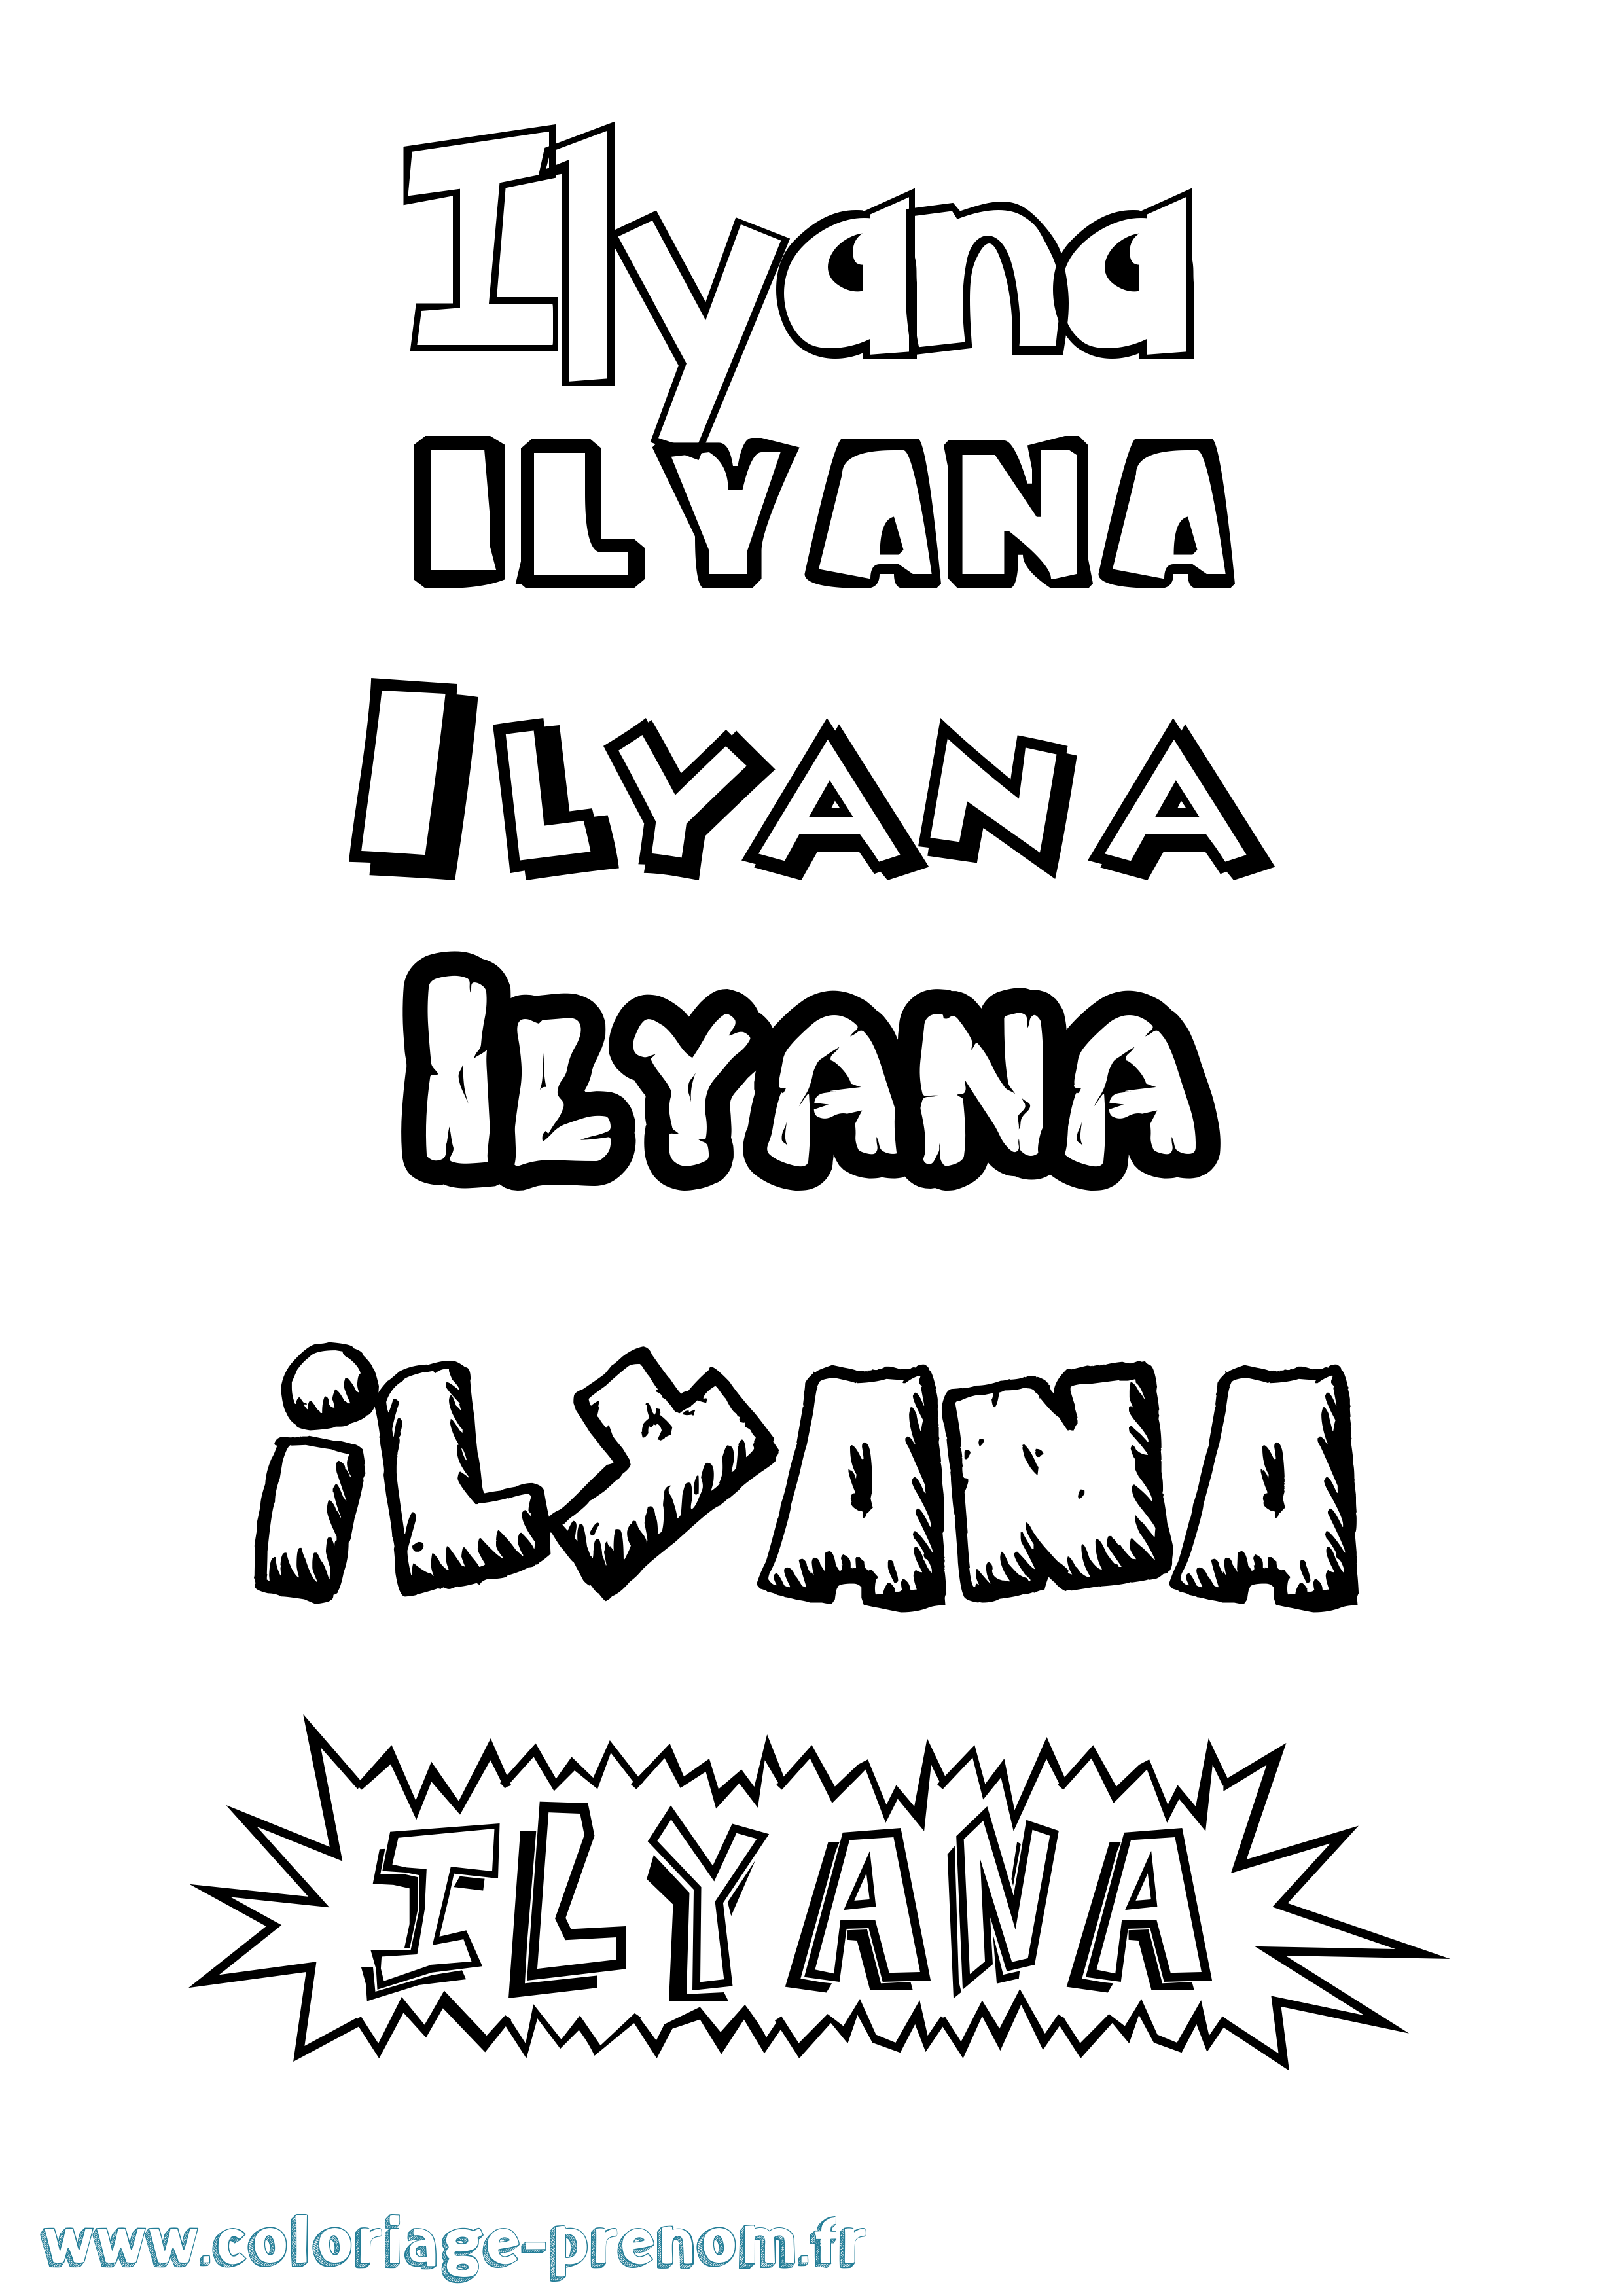 Coloriage prénom Ilyana